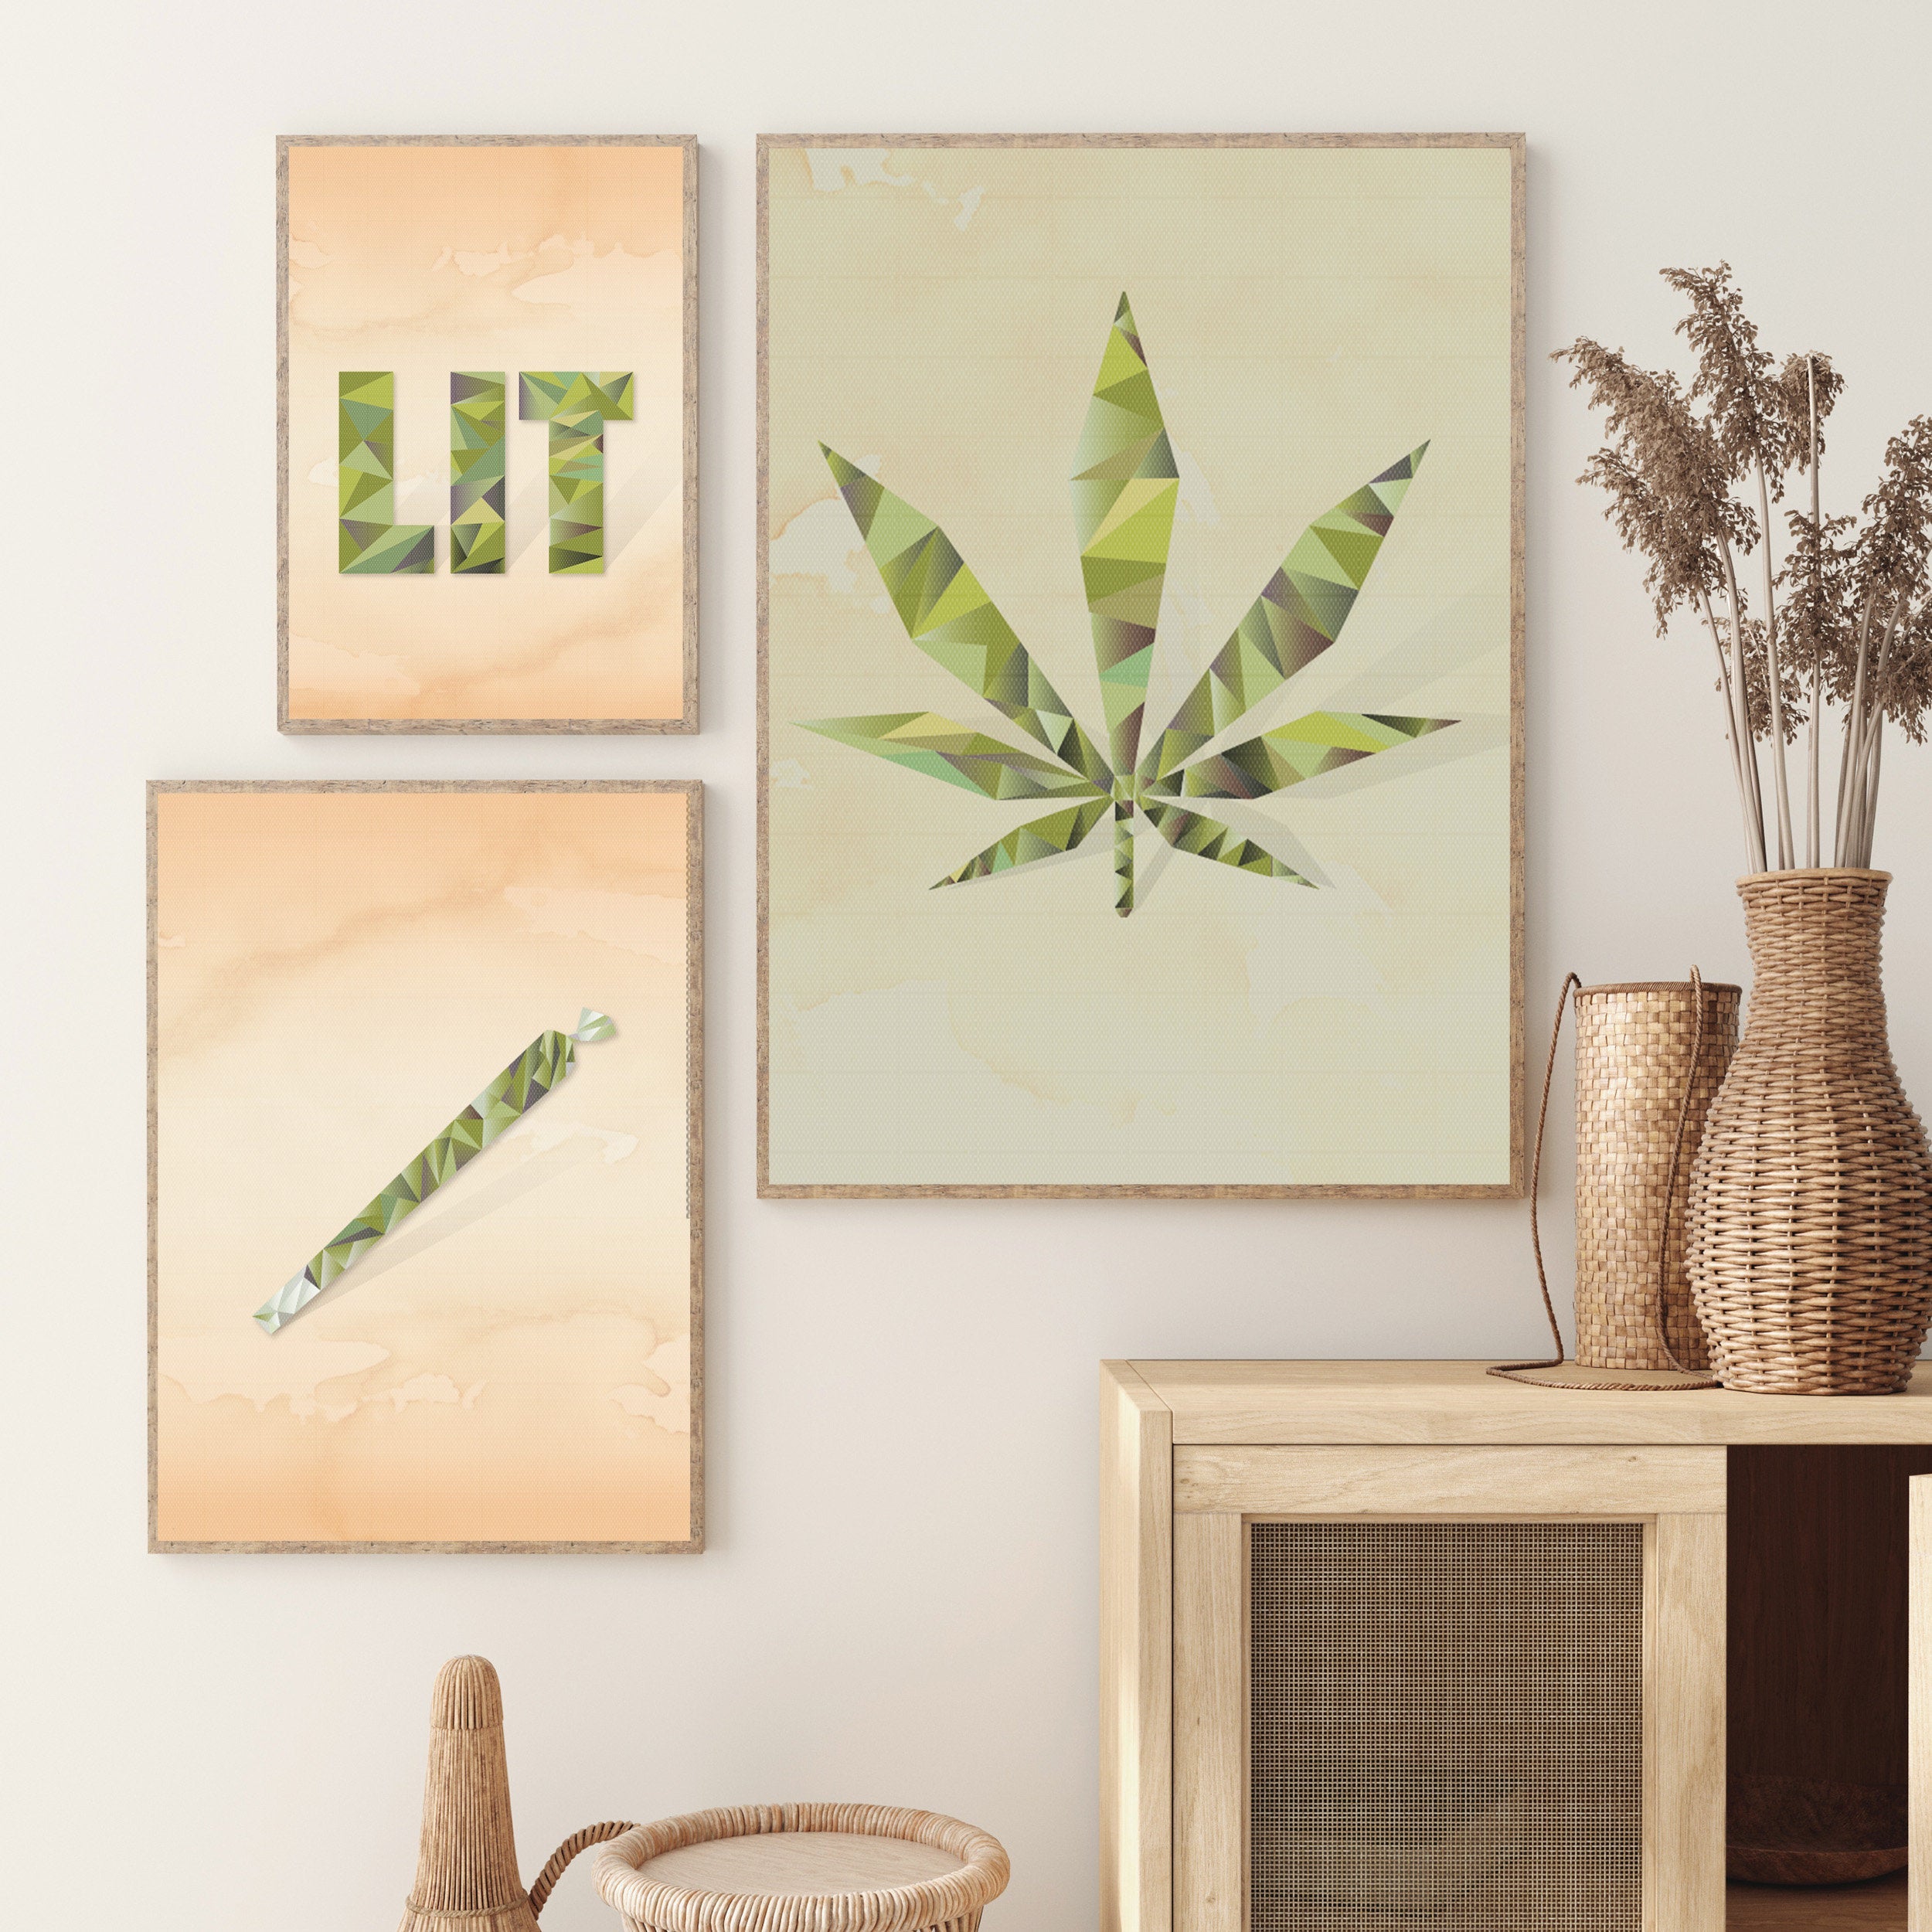 Giclee Art Print - 3 Piece "Lit" Giclee Print Set, Marijuana Home Decor, Stoner Gifts